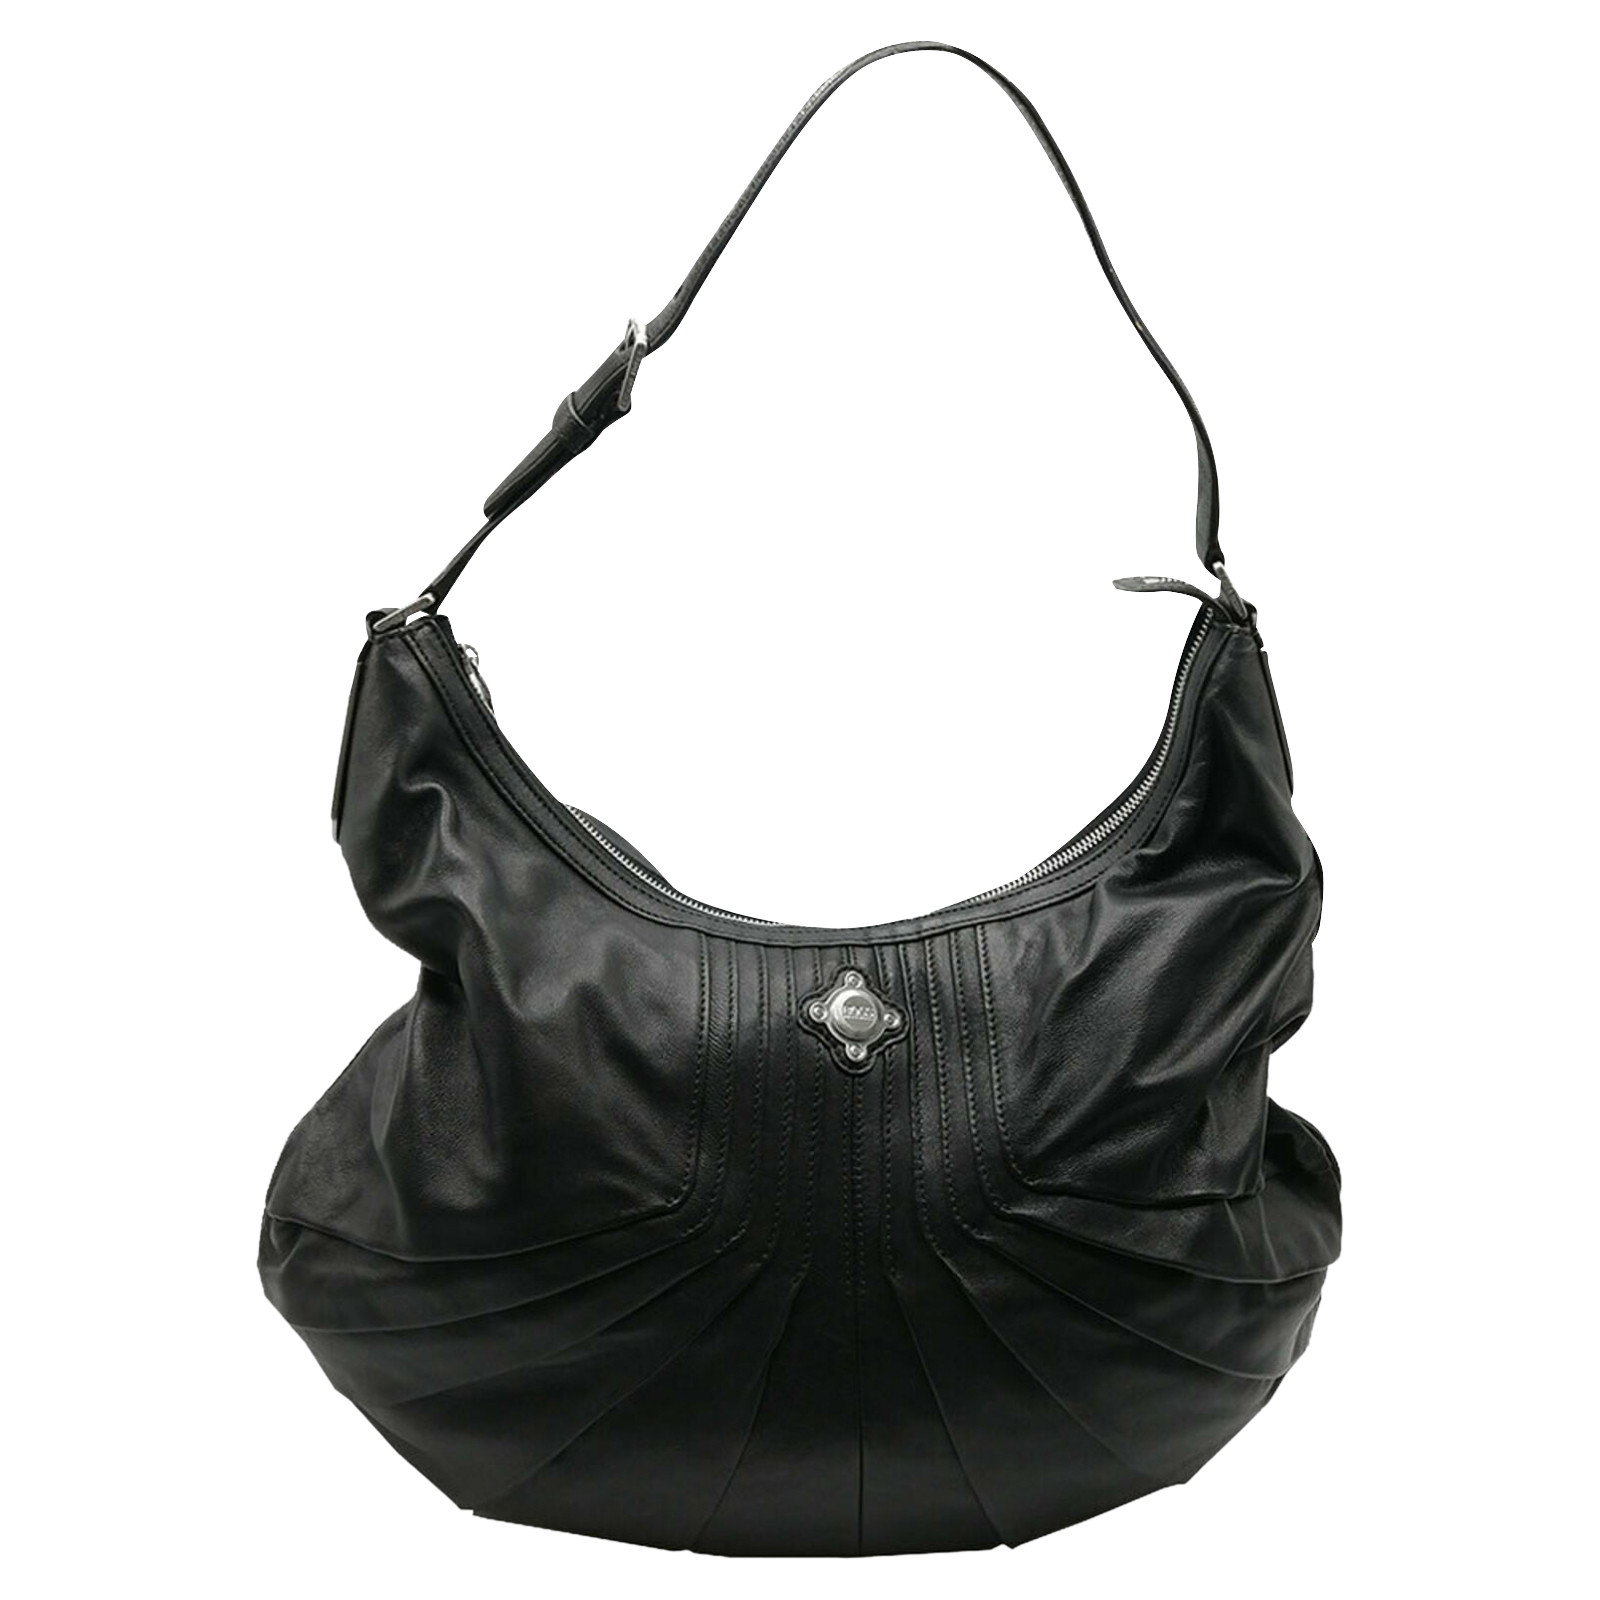 Hugo Boss Handbag Leather in Black - Second Hand Hugo Boss Handbag Leather  in Black buy used for 240€ (4525565)